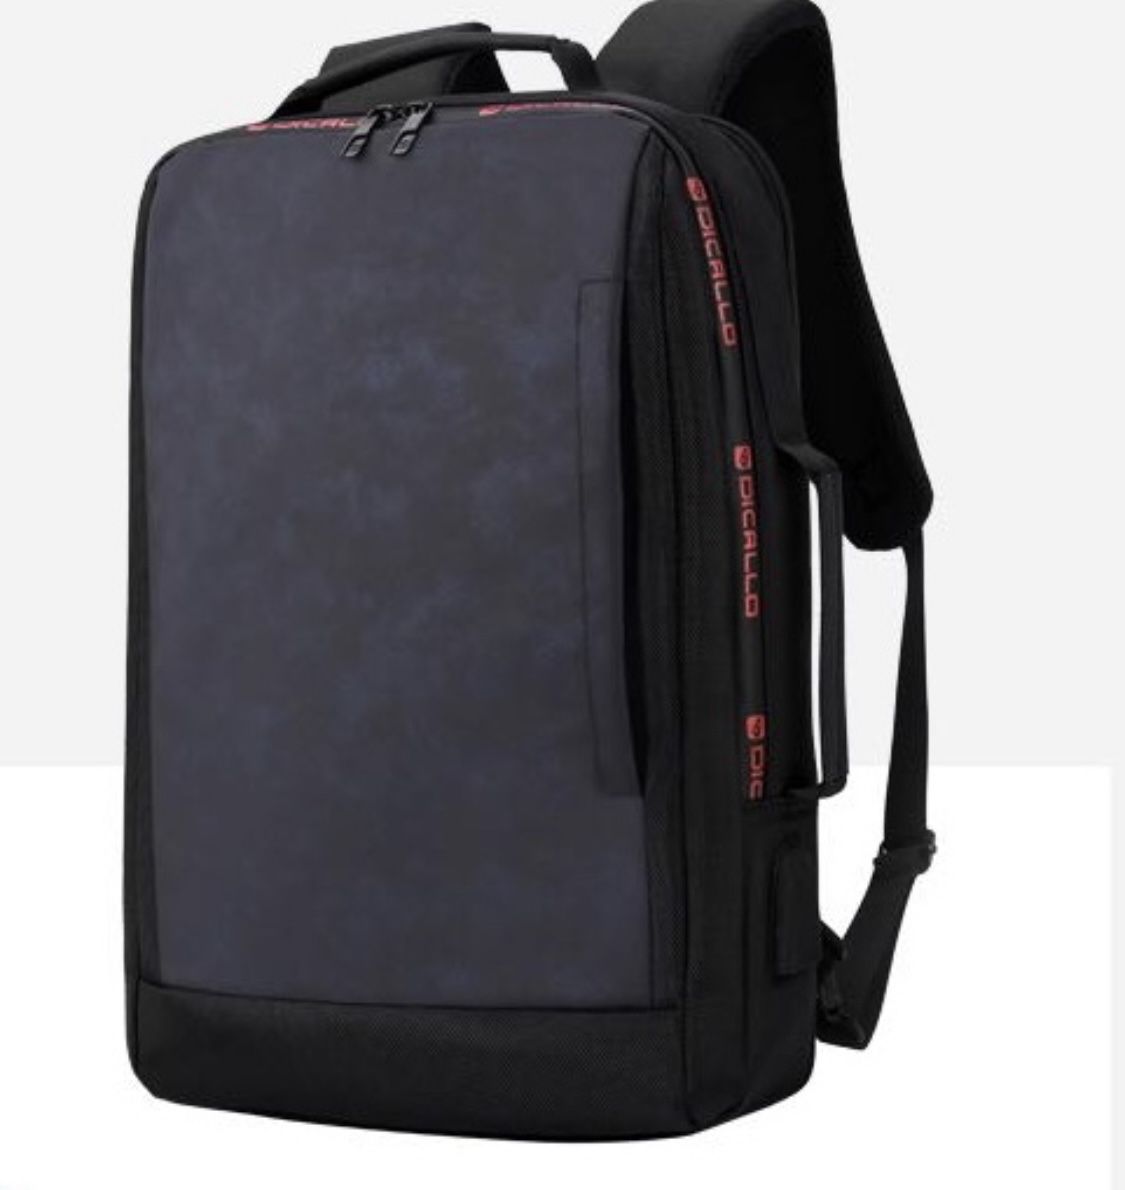 Backpack For Travel 